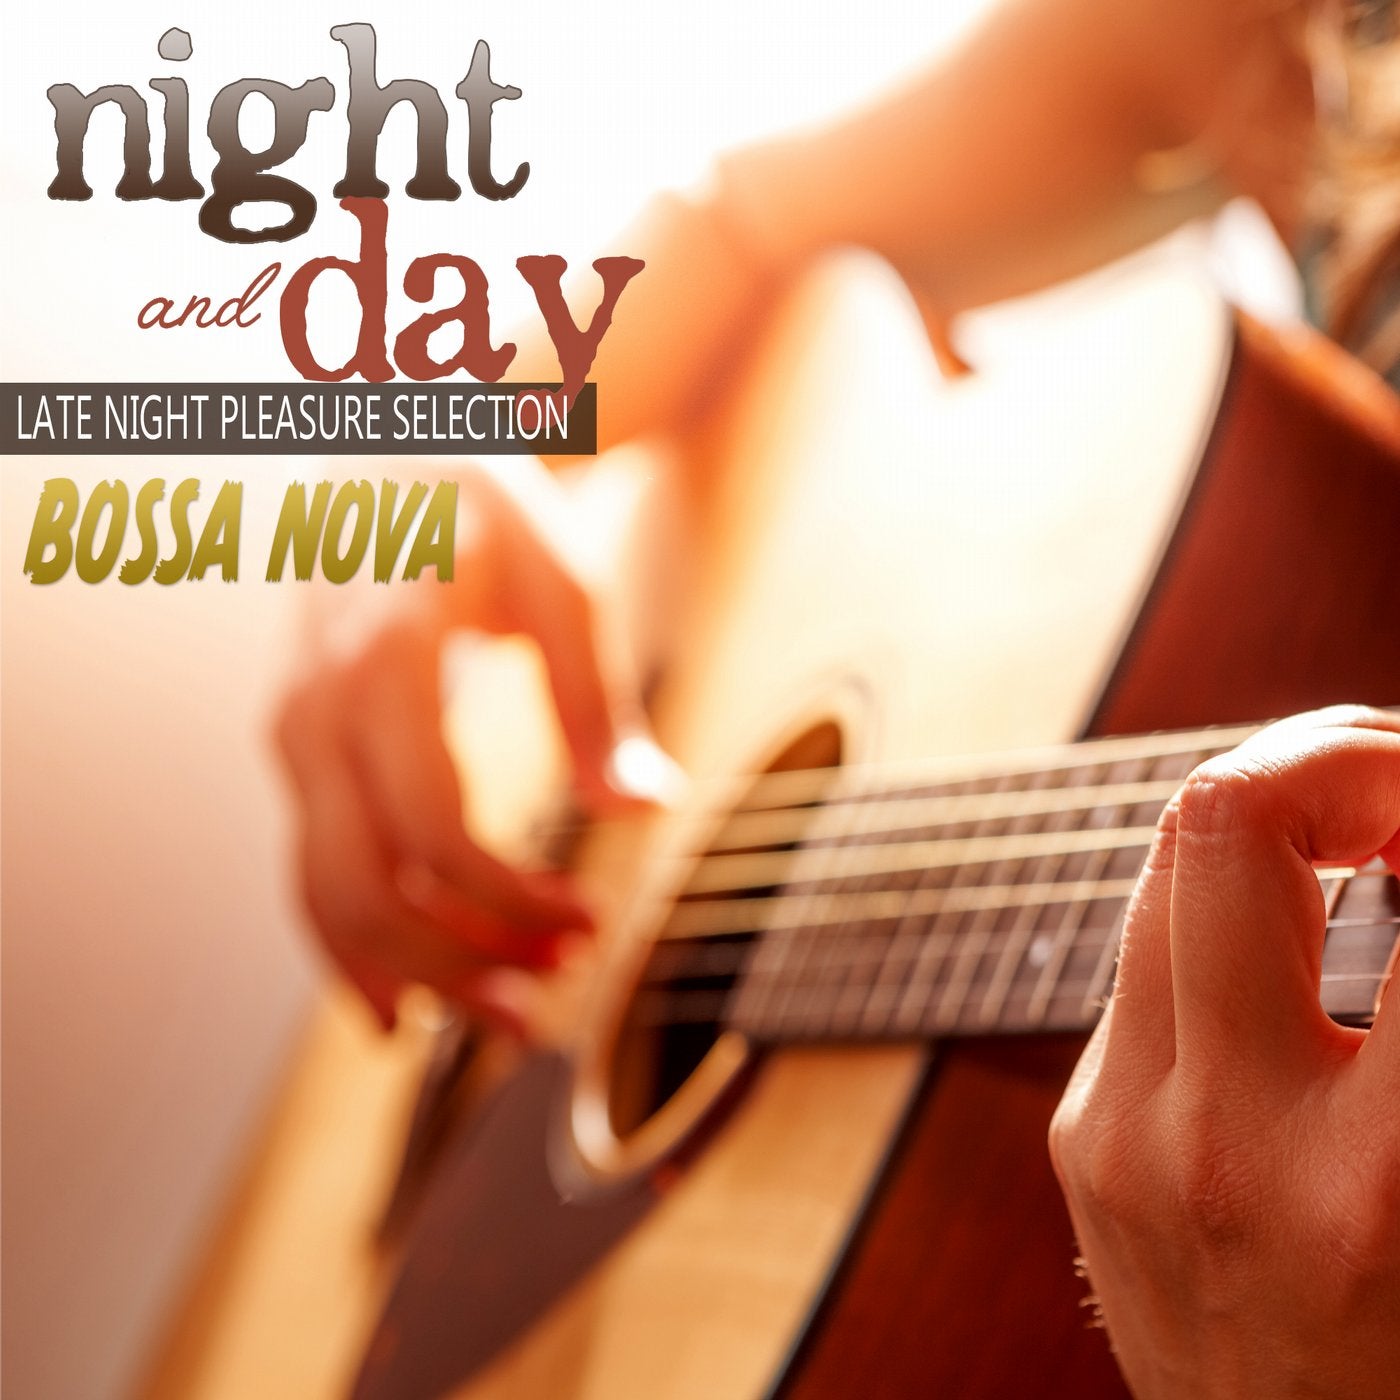 Night and Day: Bossa Nova Late Night Pleasure Selection